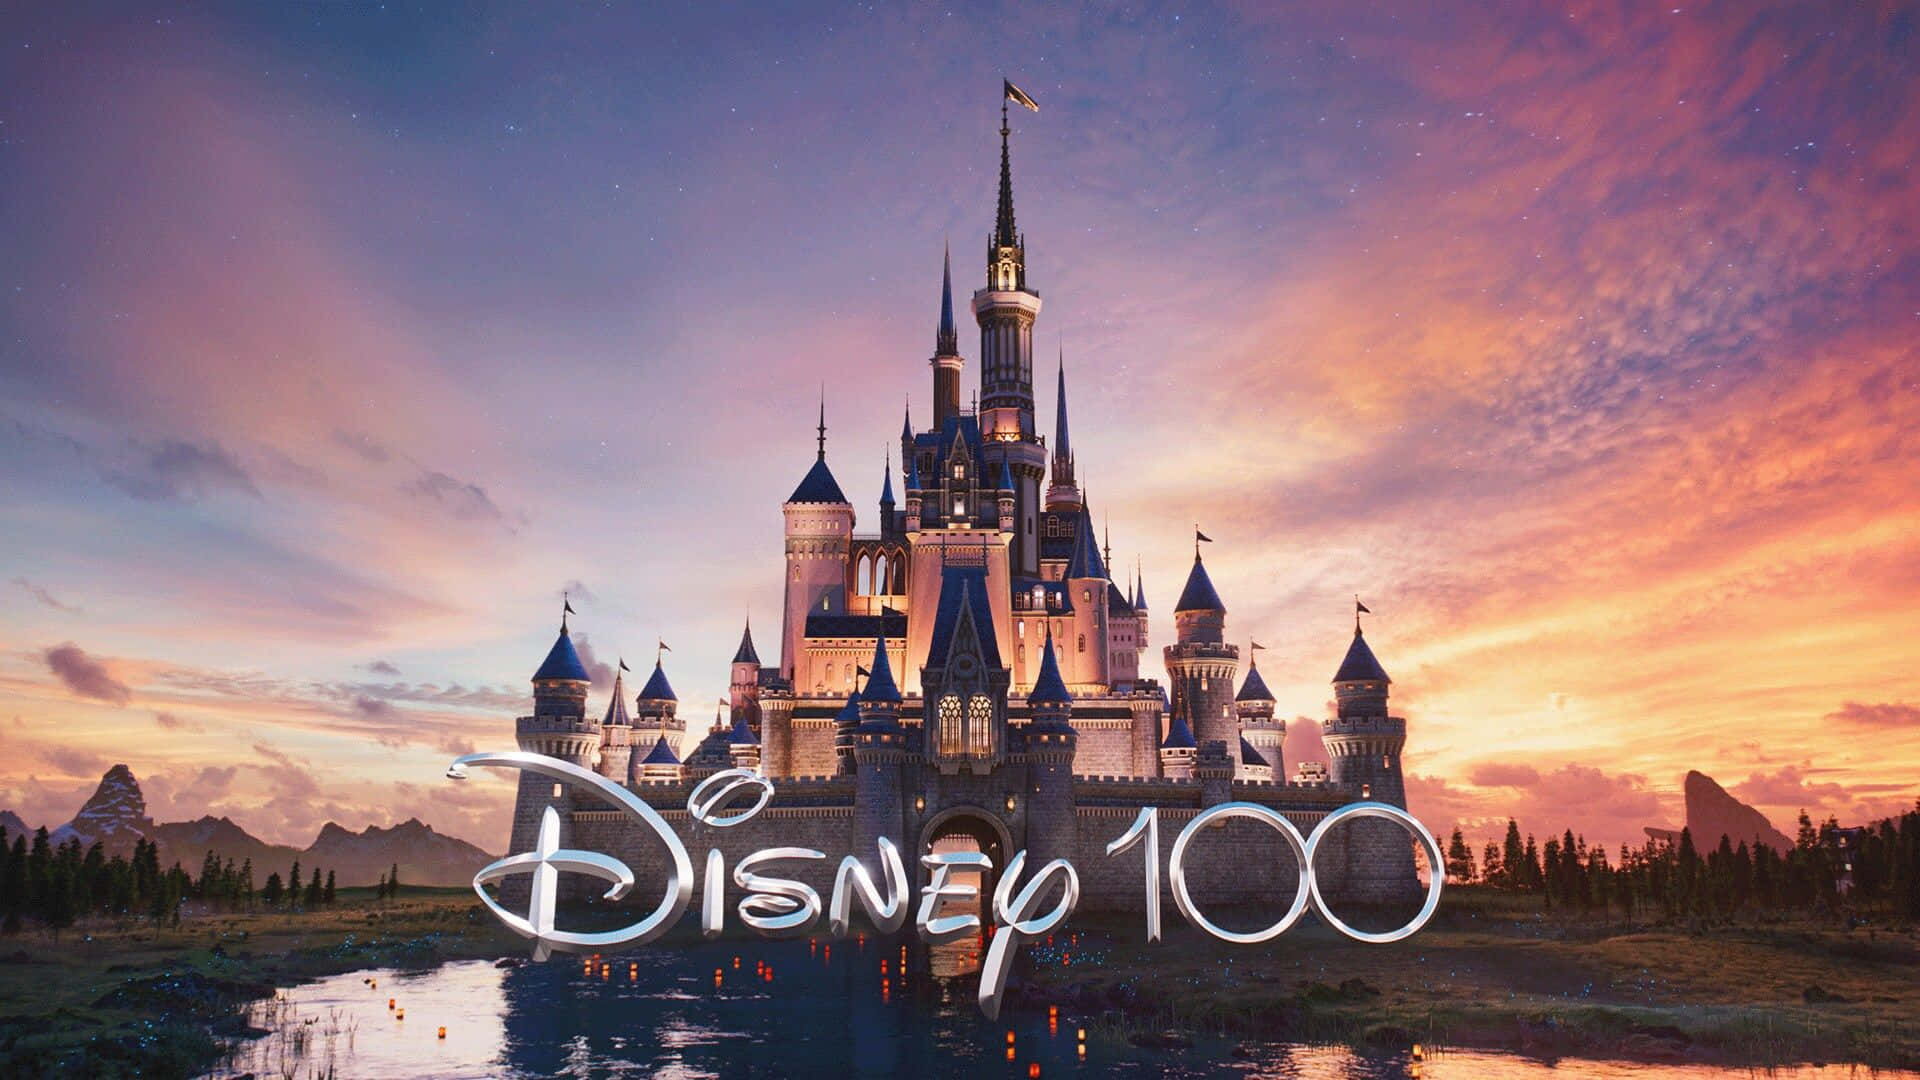 Disney100 Celebration Castle Sunset Wallpaper